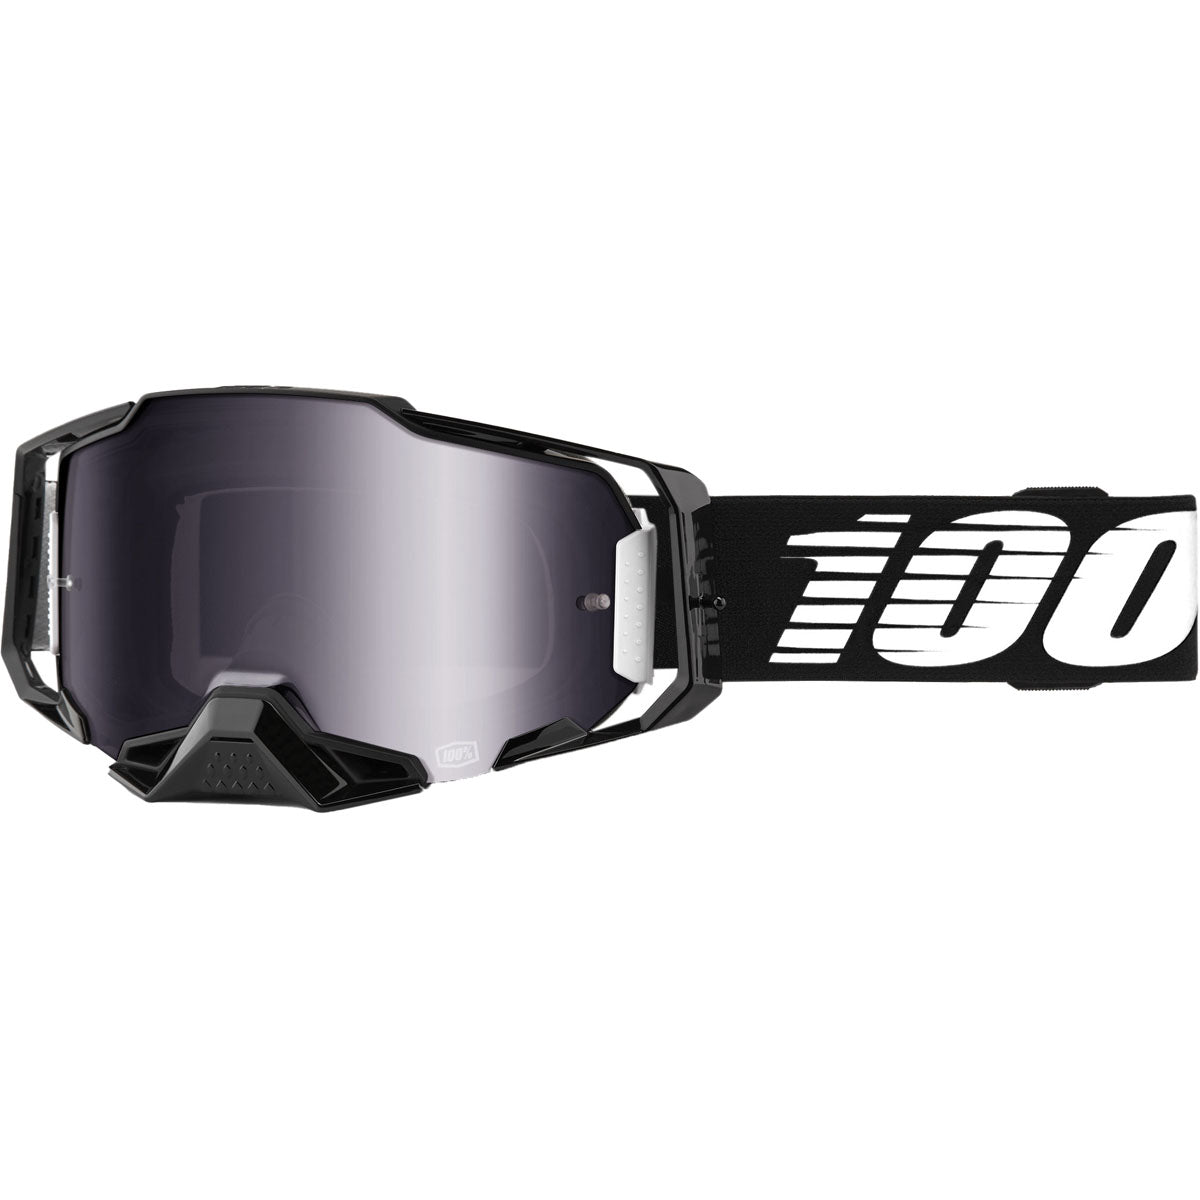 100% Armega Goggles Black / Mirror Silver Flash Lens